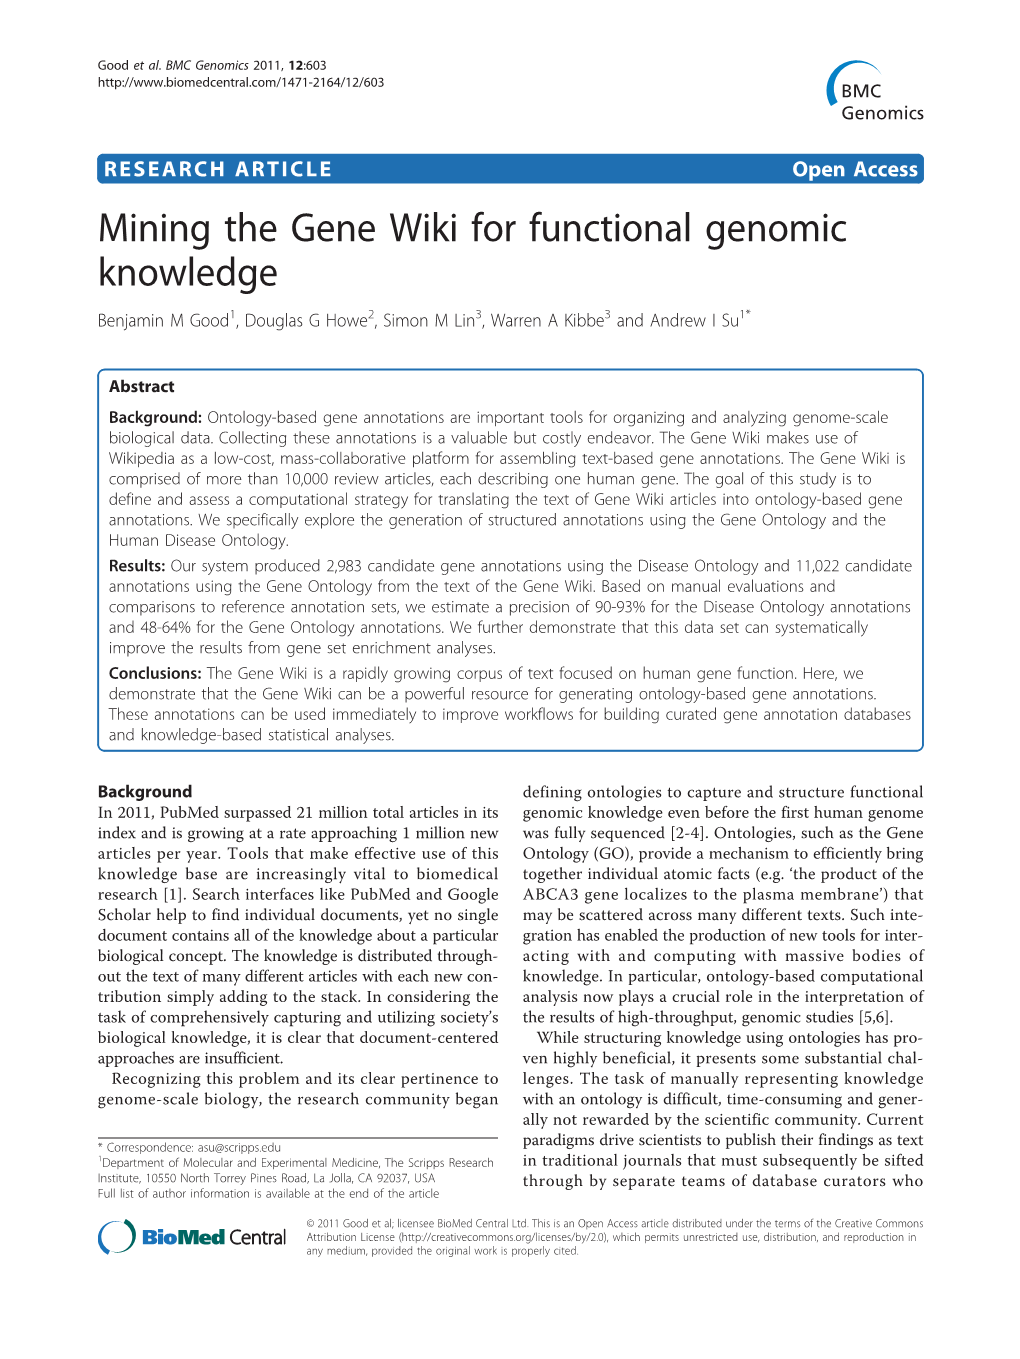 Mining the Gene Wiki for Functional Genomic Knowledge Benjamin M Good1, Douglas G Howe2, Simon M Lin3, Warren a Kibbe3 and Andrew I Su1*